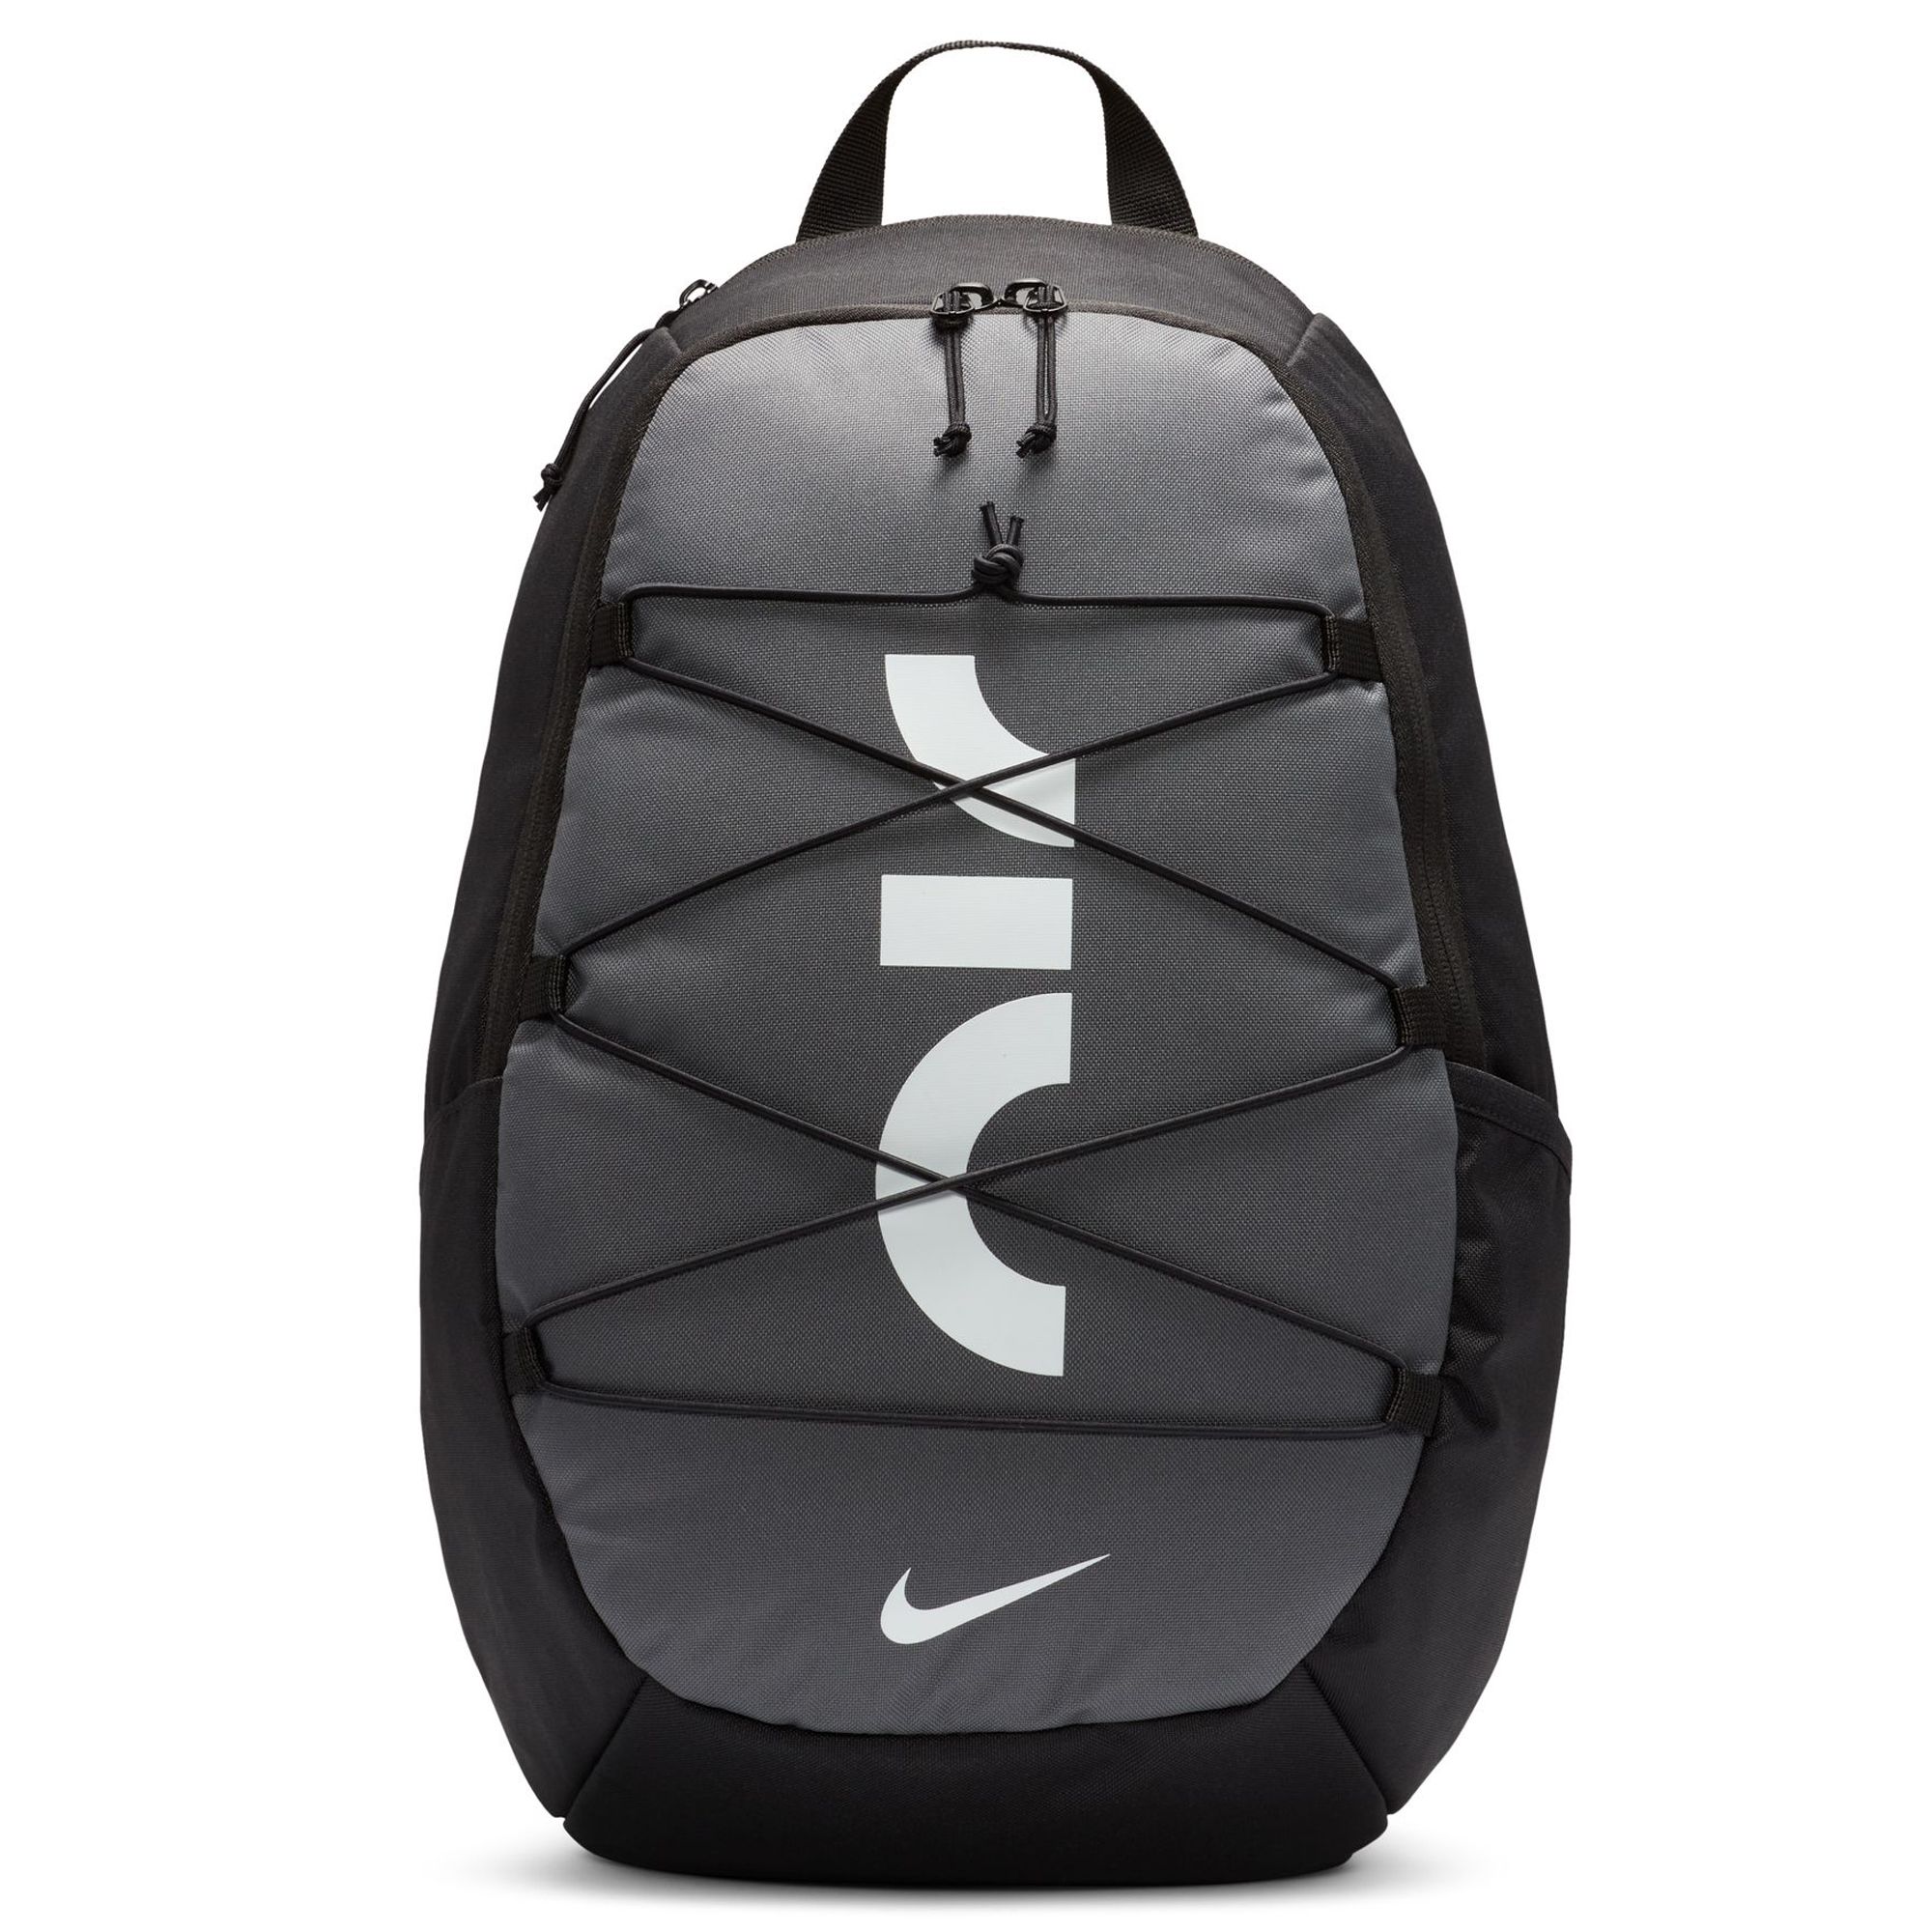 Nike Advance crossbody bag in dark gray